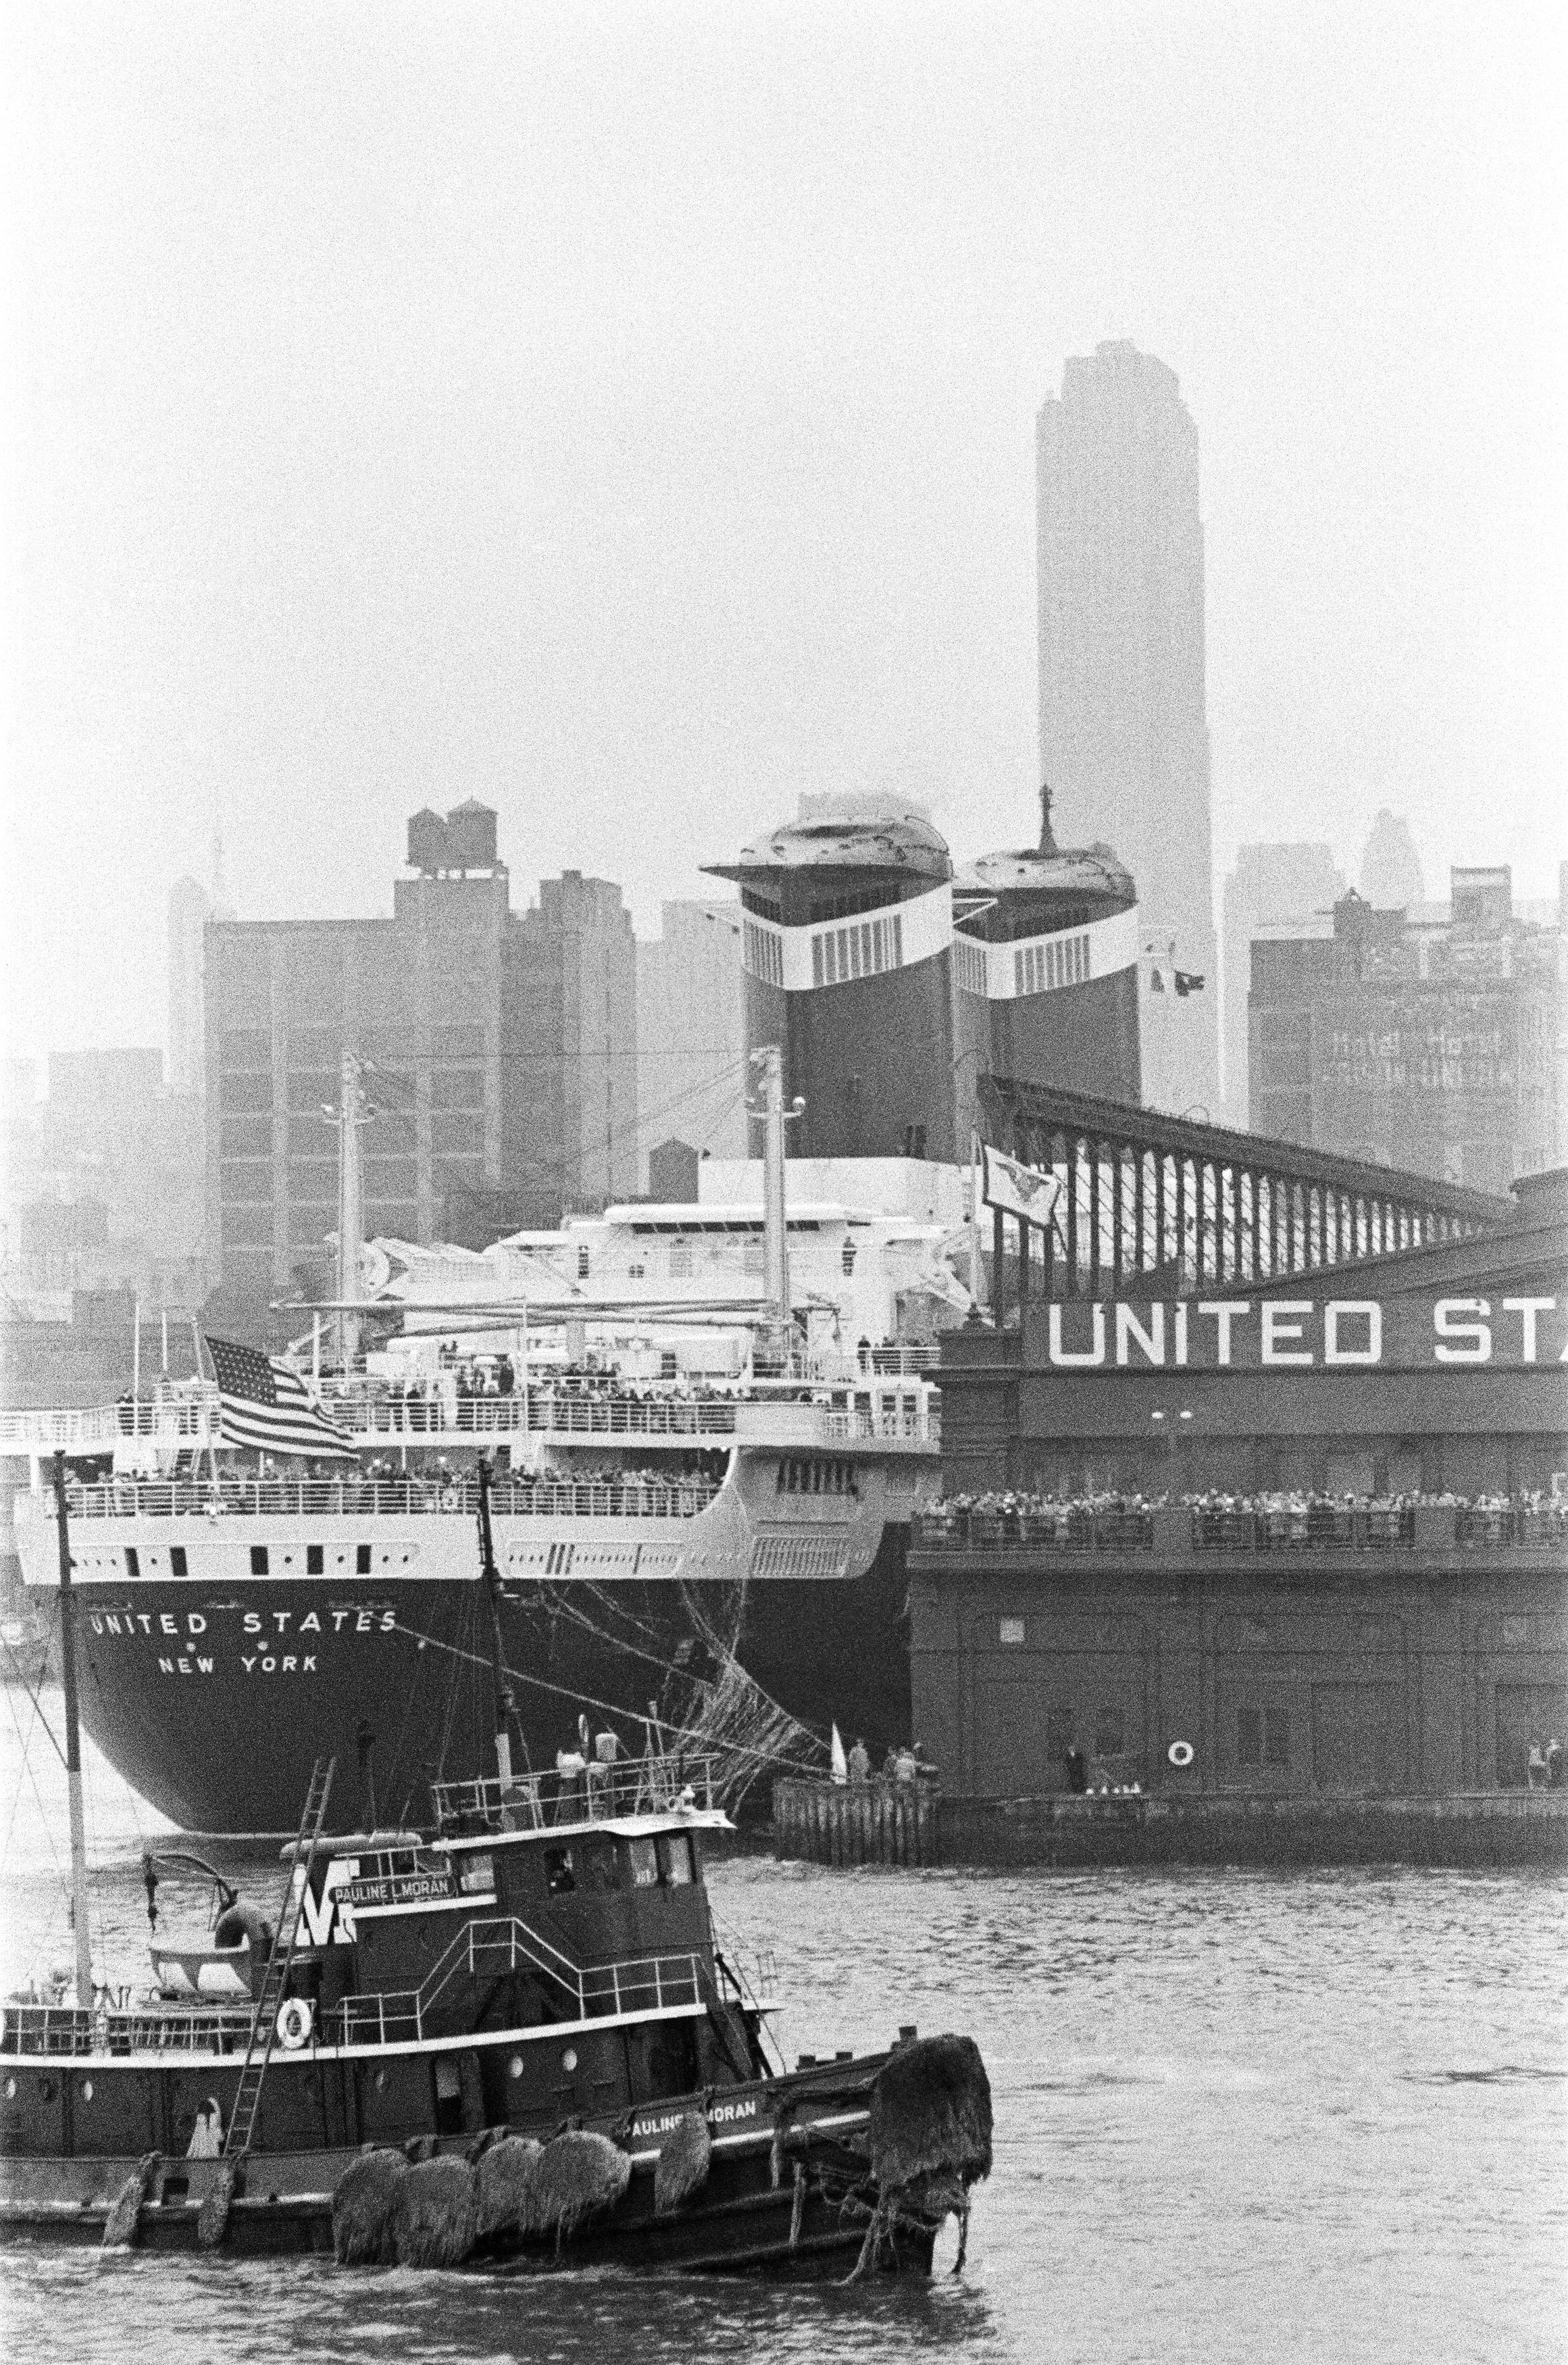 Fabrizio La Torre Black and White Photograph - United States - New York, 1955 - Contemporary Black & White Photography